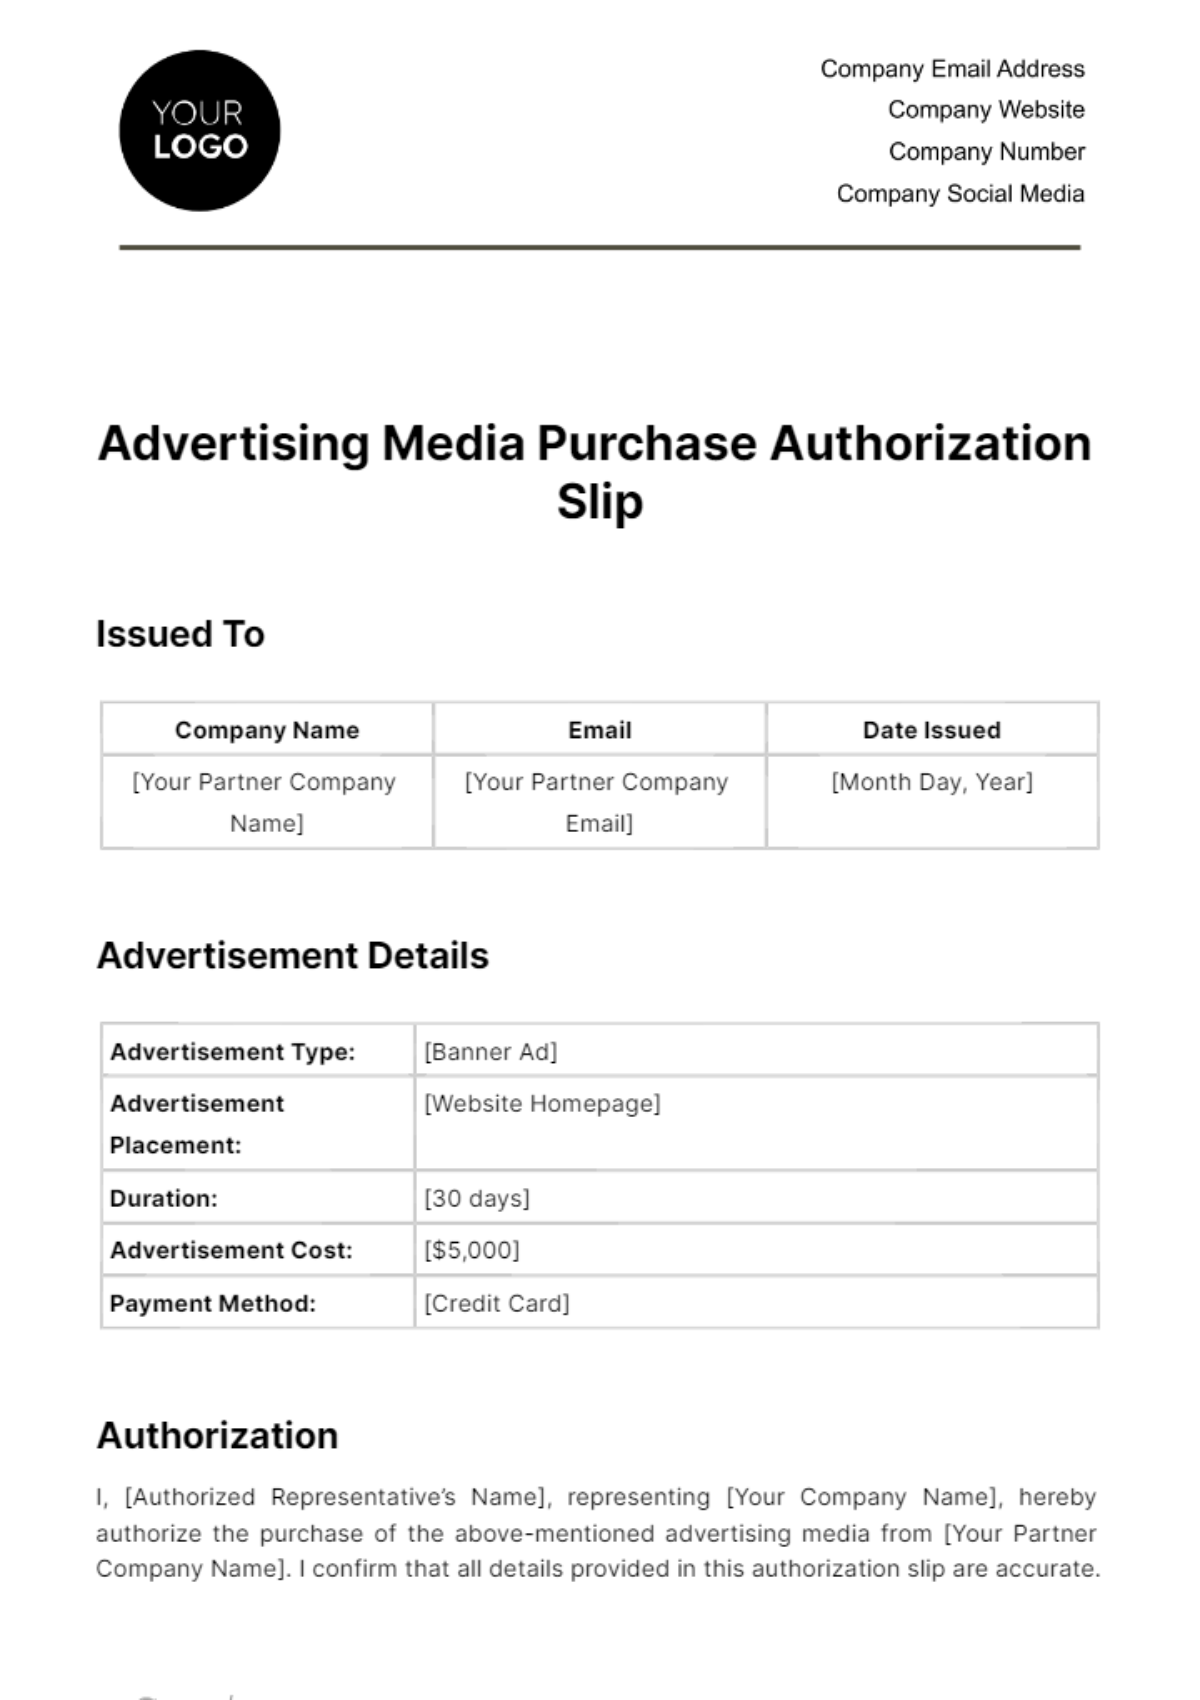 Free Advertising Media Purchase Authorization Slip Template